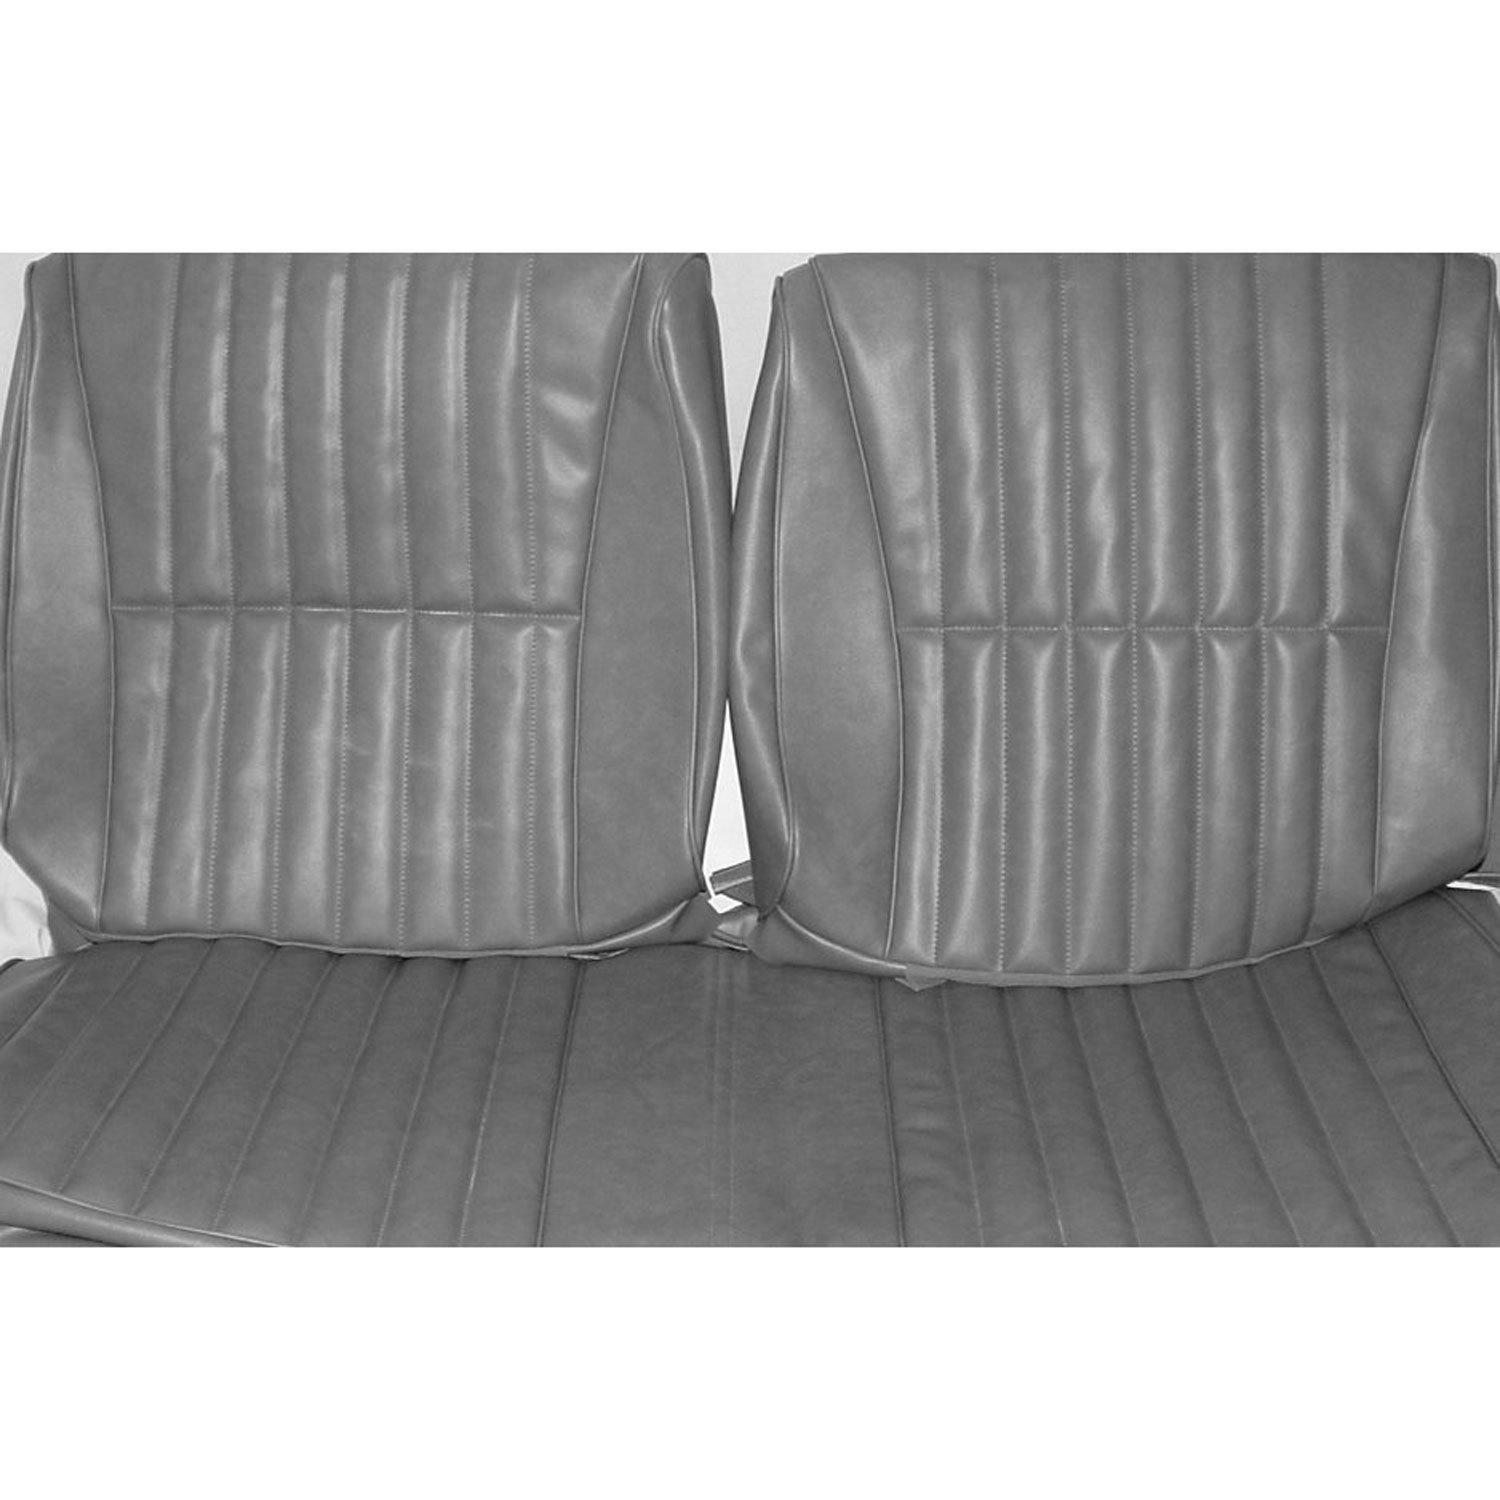 Split Bench Seat Covers 1977 Cutlass